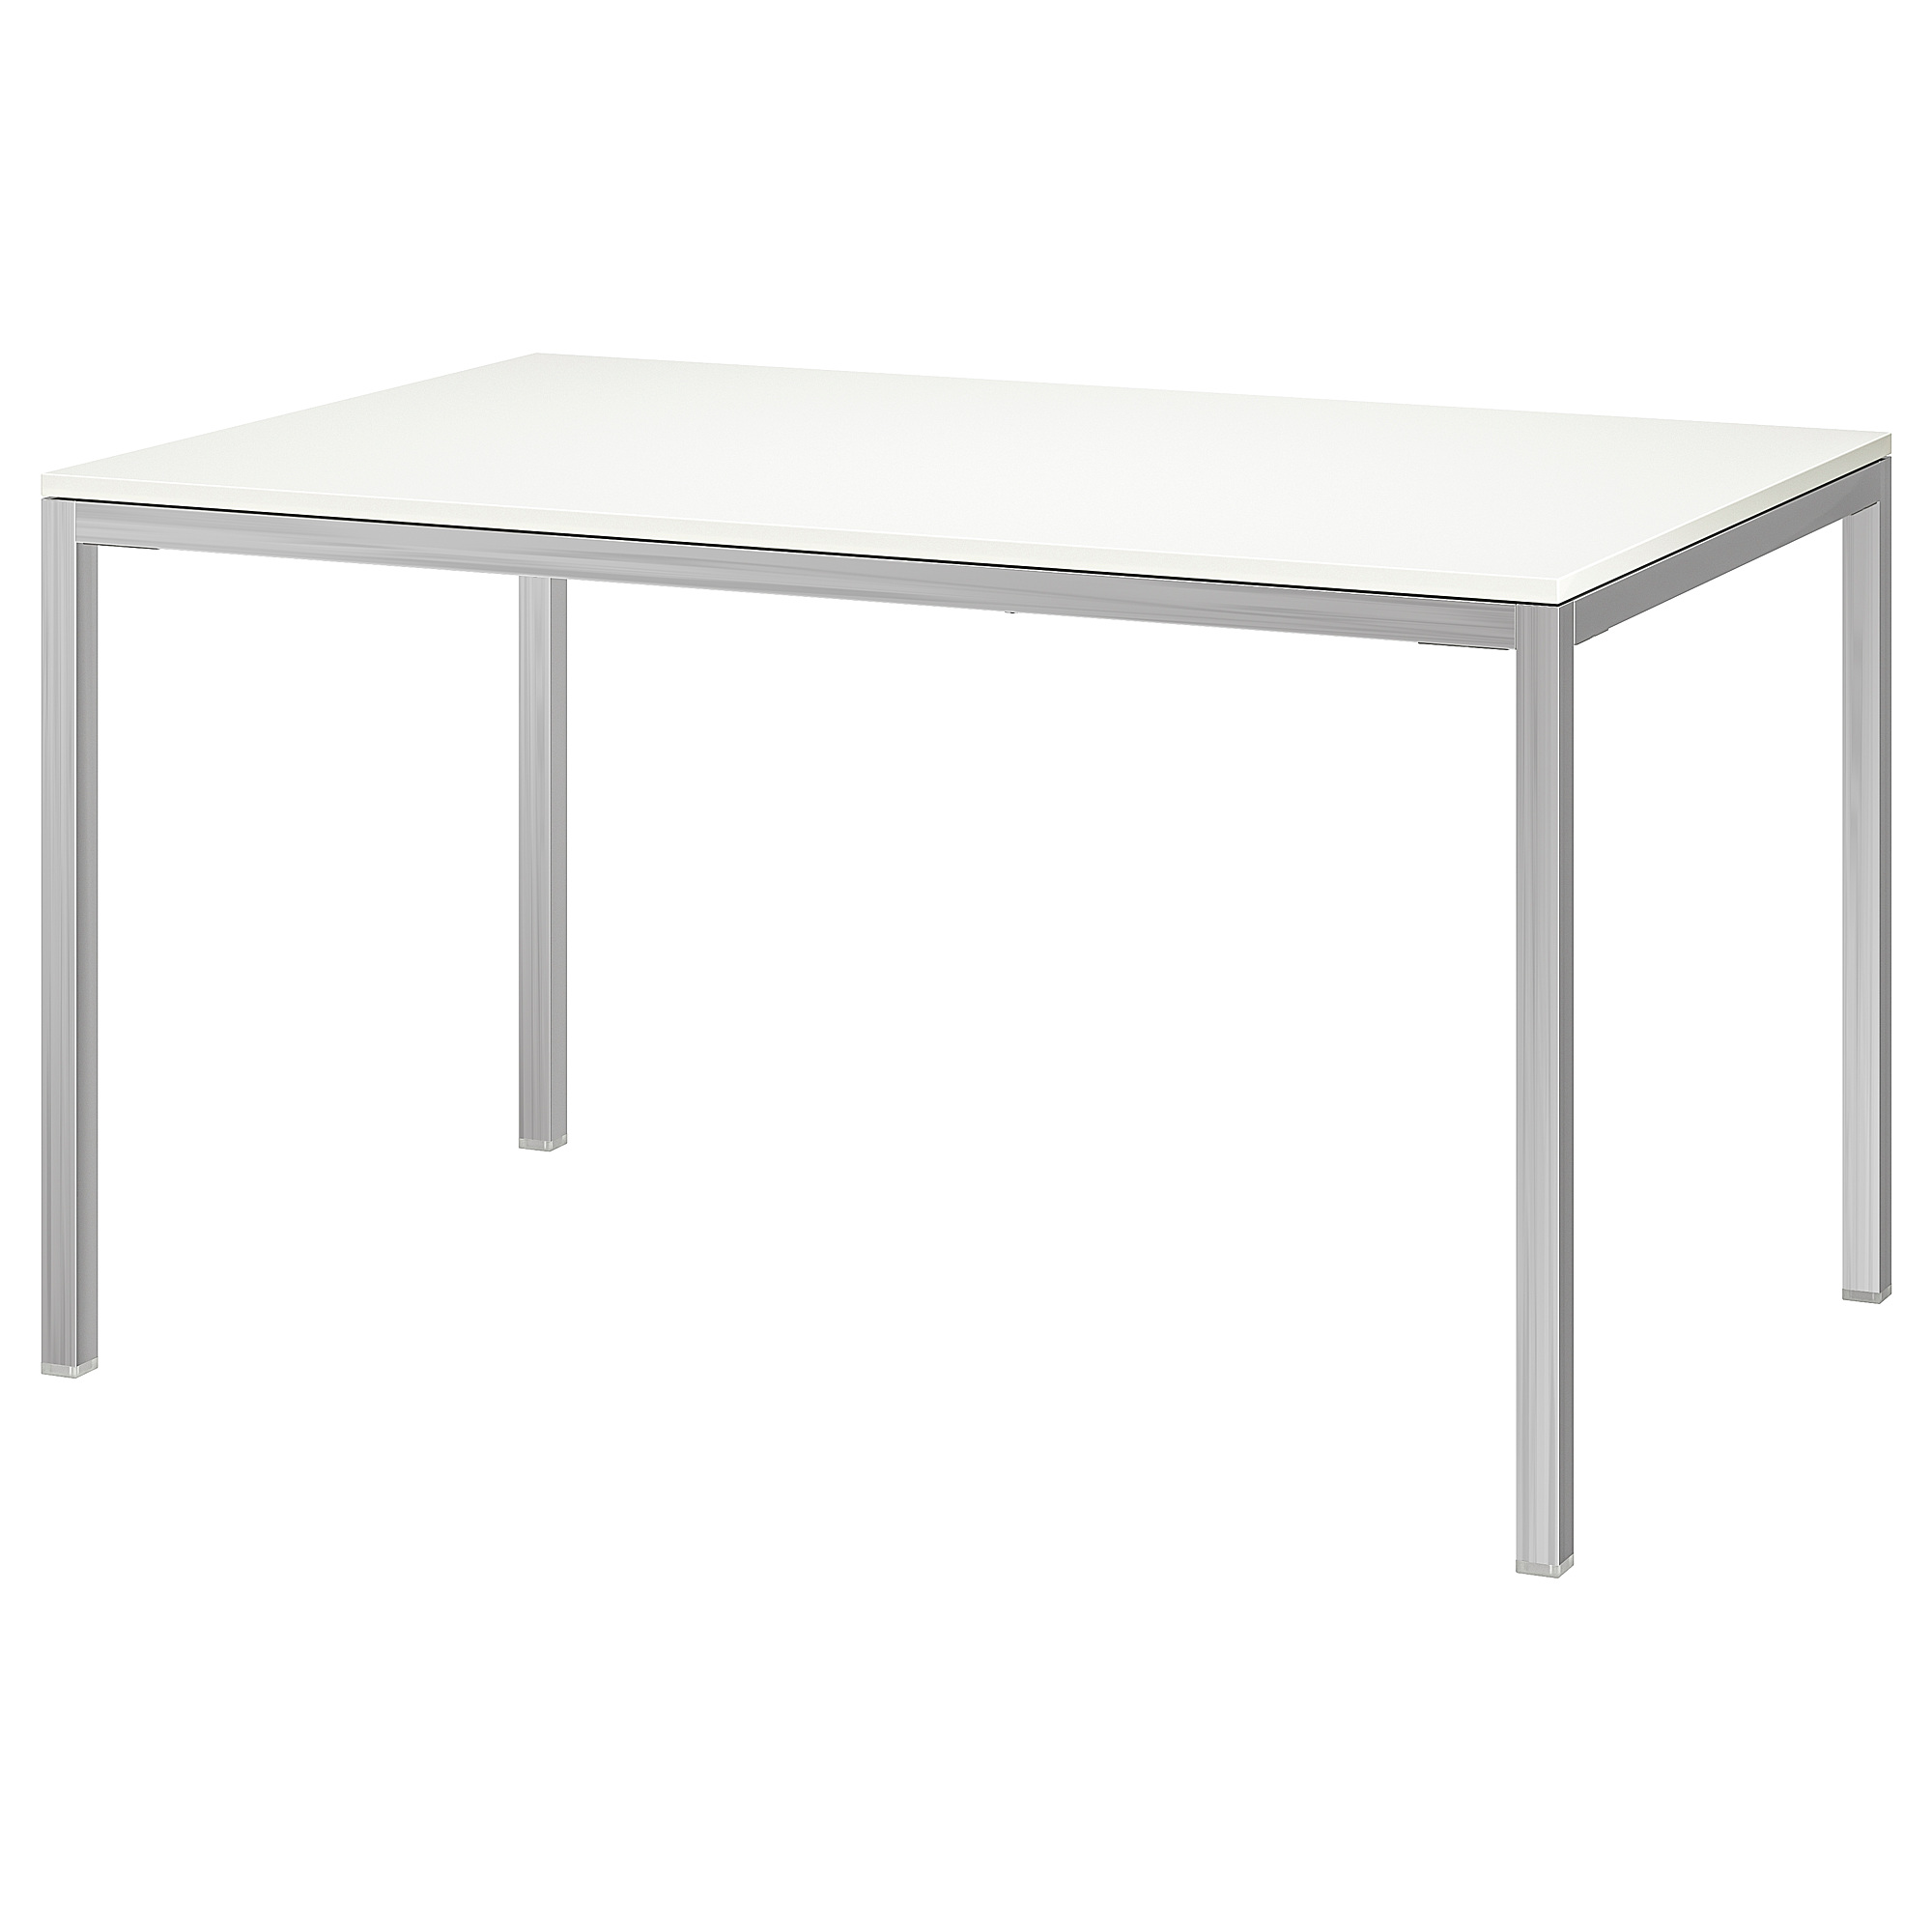 Икеа стол кухонный белый. Стол ikea Torsby. Melltorp МЕЛЬТОРП стол белый 75x75 см. Стол кухонный икеа ТОРСБИ. Стол ТОРСБИ икеа 135 85.